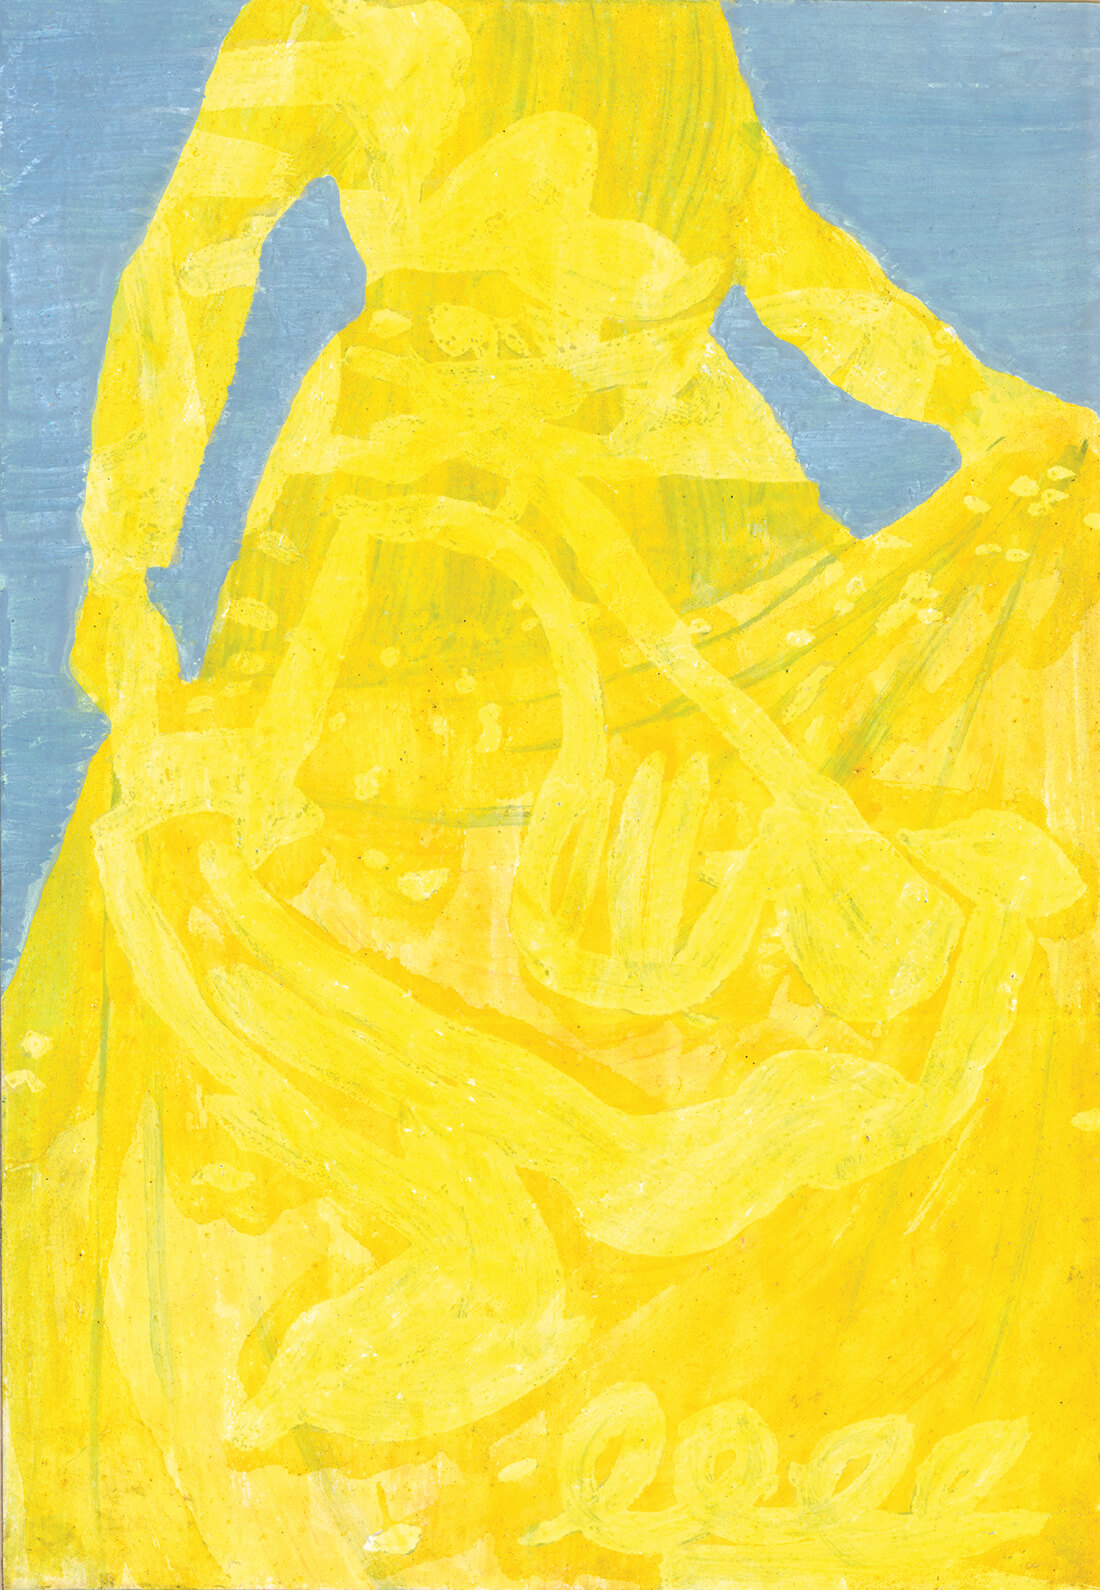 untitled (zabana amarilla), 55 x 39 cm, egg tempera on paper, 2000